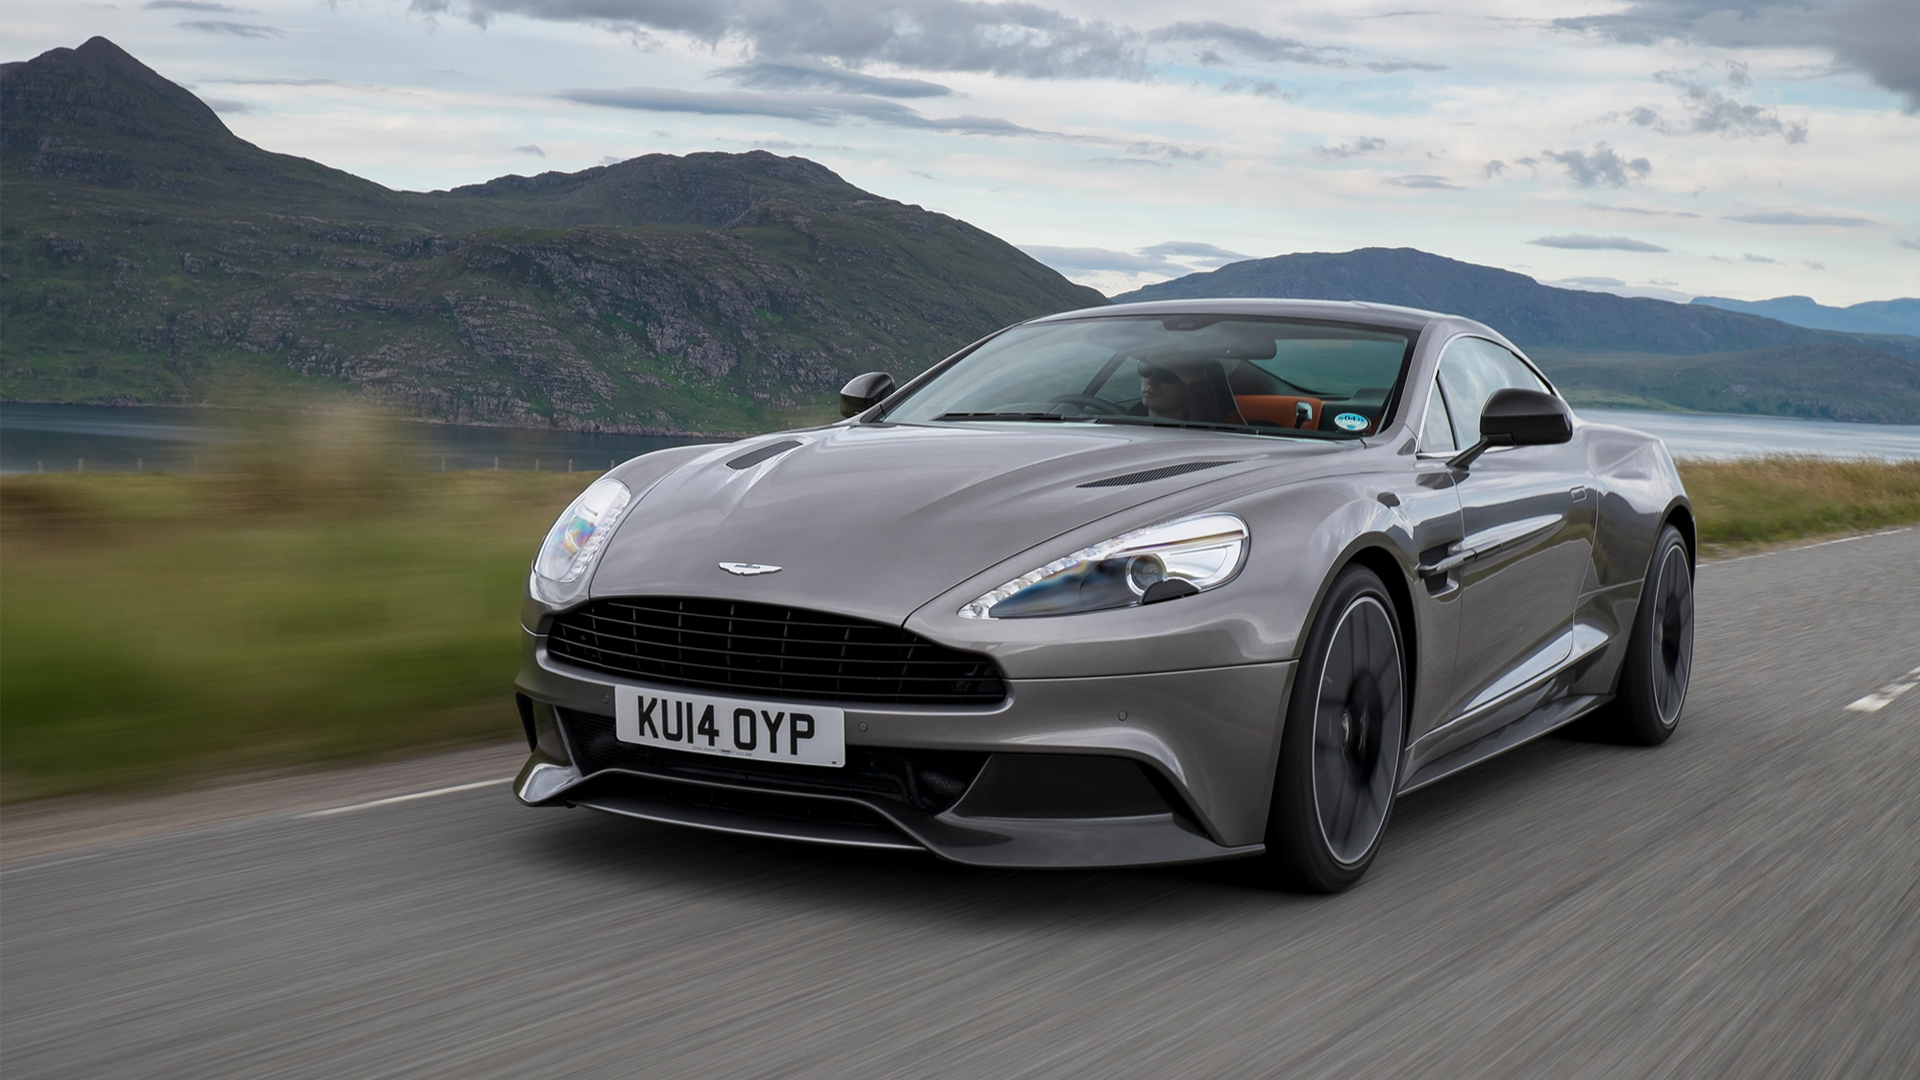 Aston Martin Vanquish News and Reviews | Motor1.com